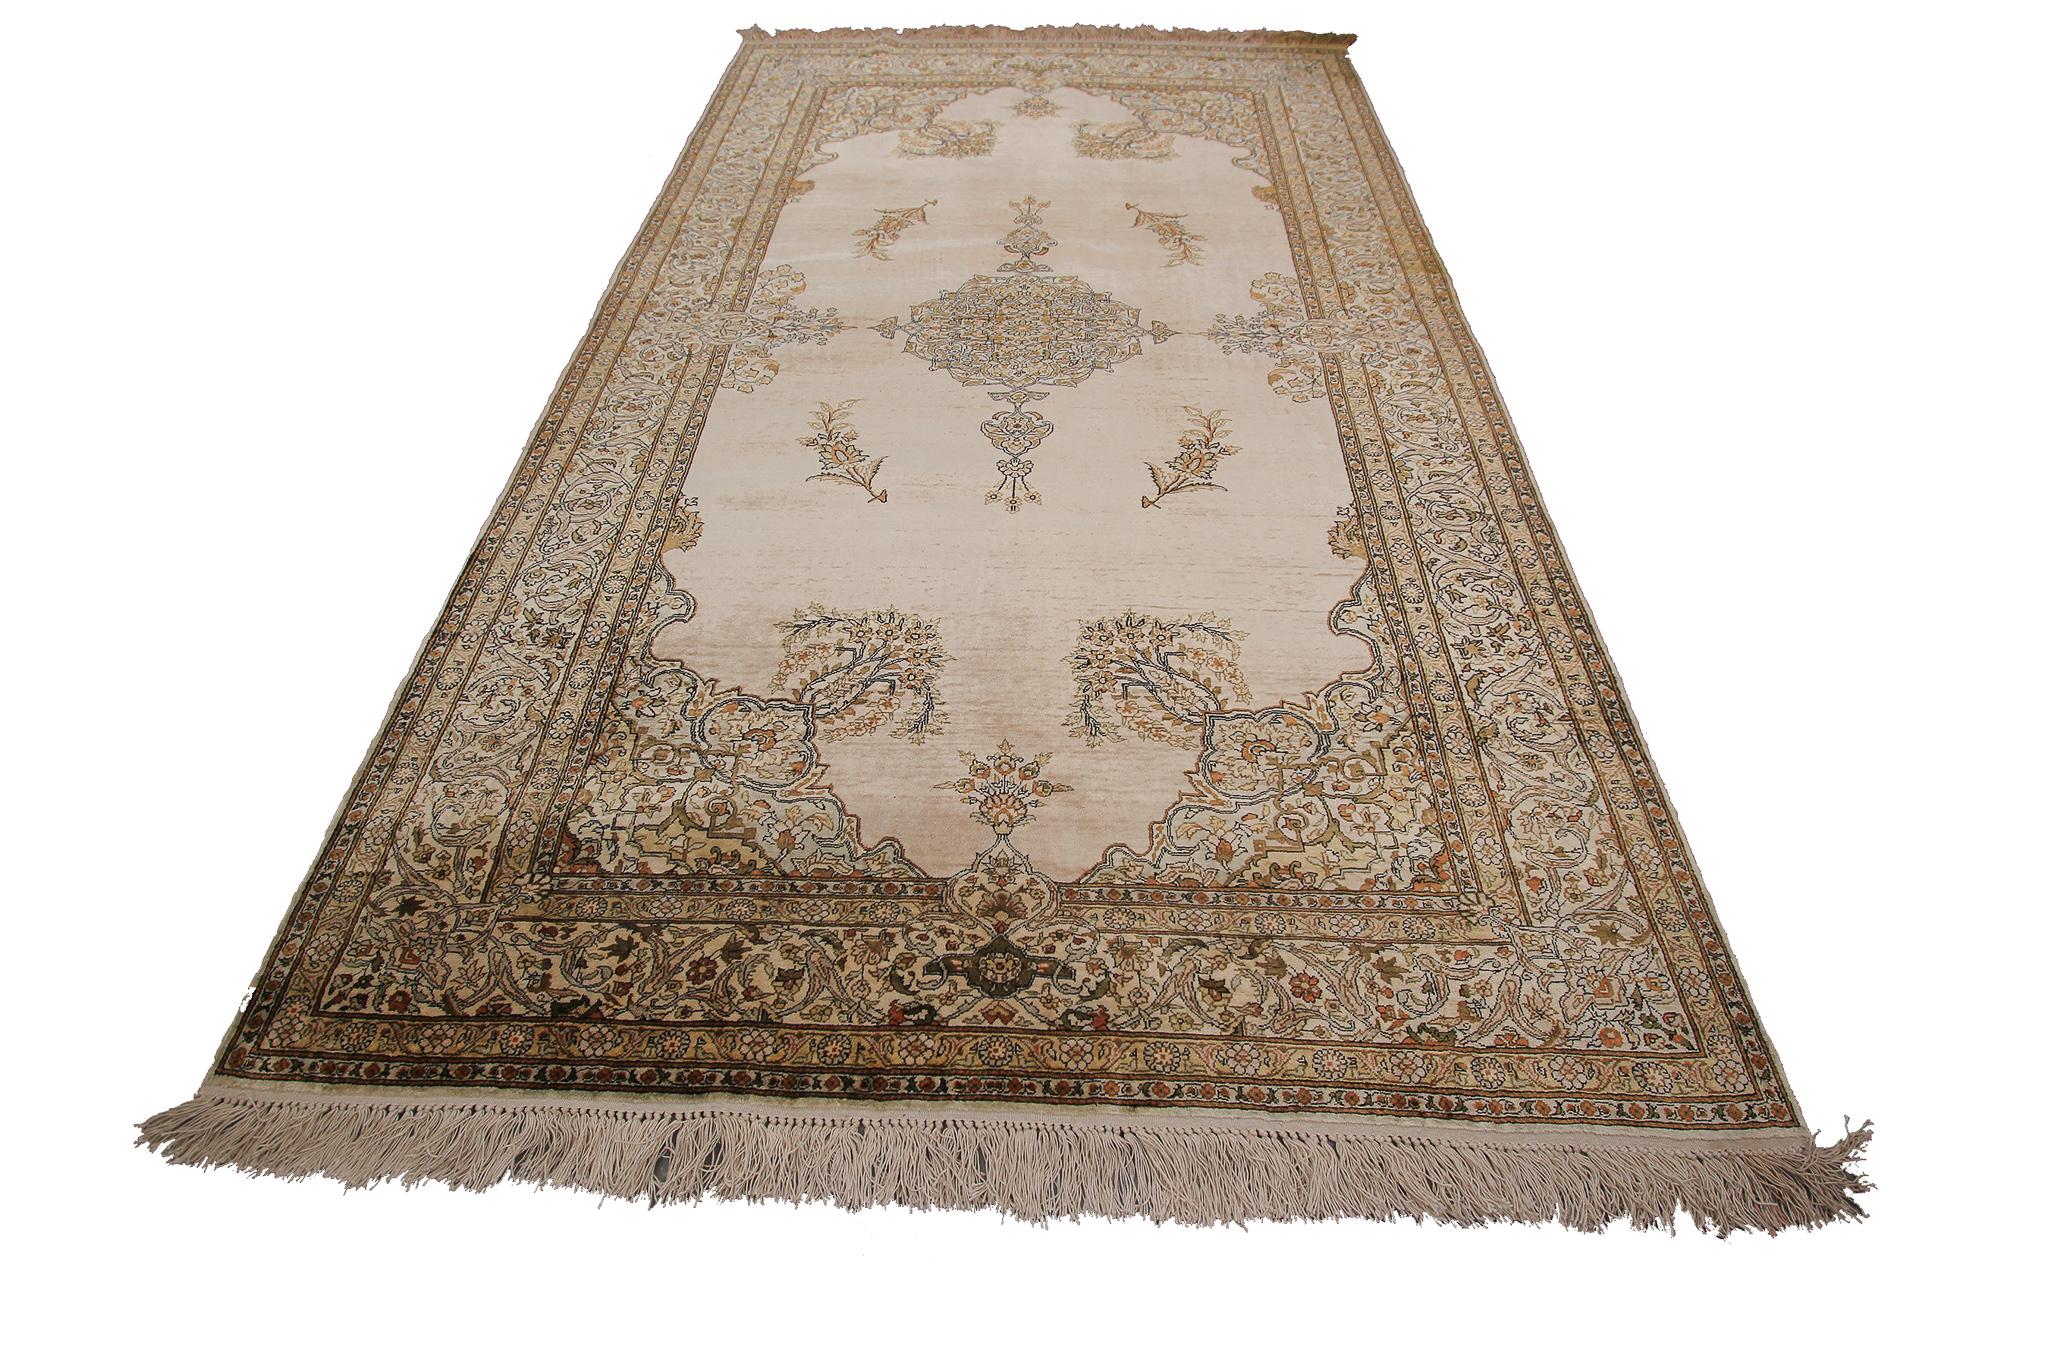 Museum quality rare vintage 100% pure silk hereke rug kaysari rug fine high quality 3'8